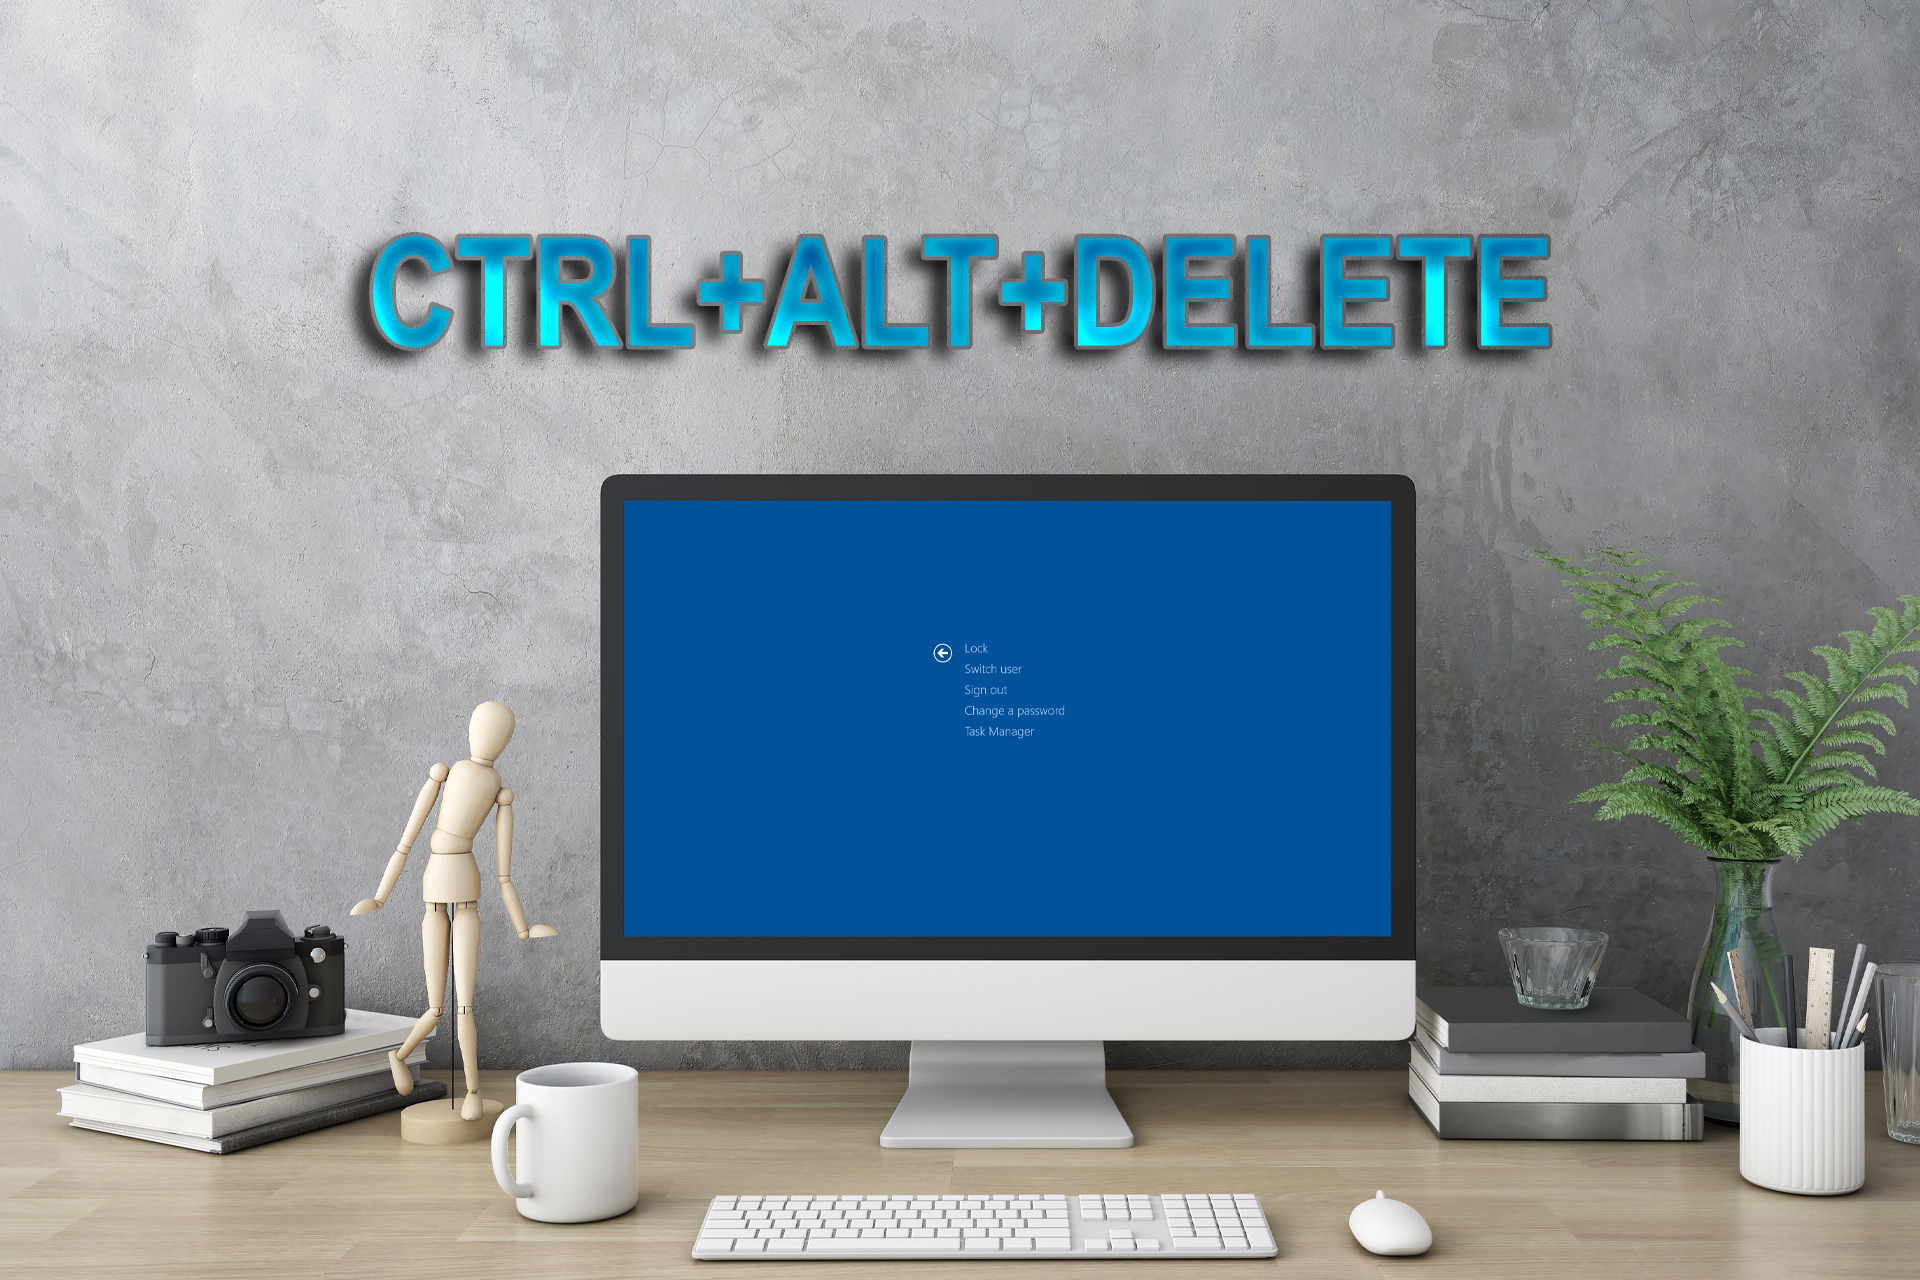 Fix Computer stuck on CTRL+ALT+DELETE